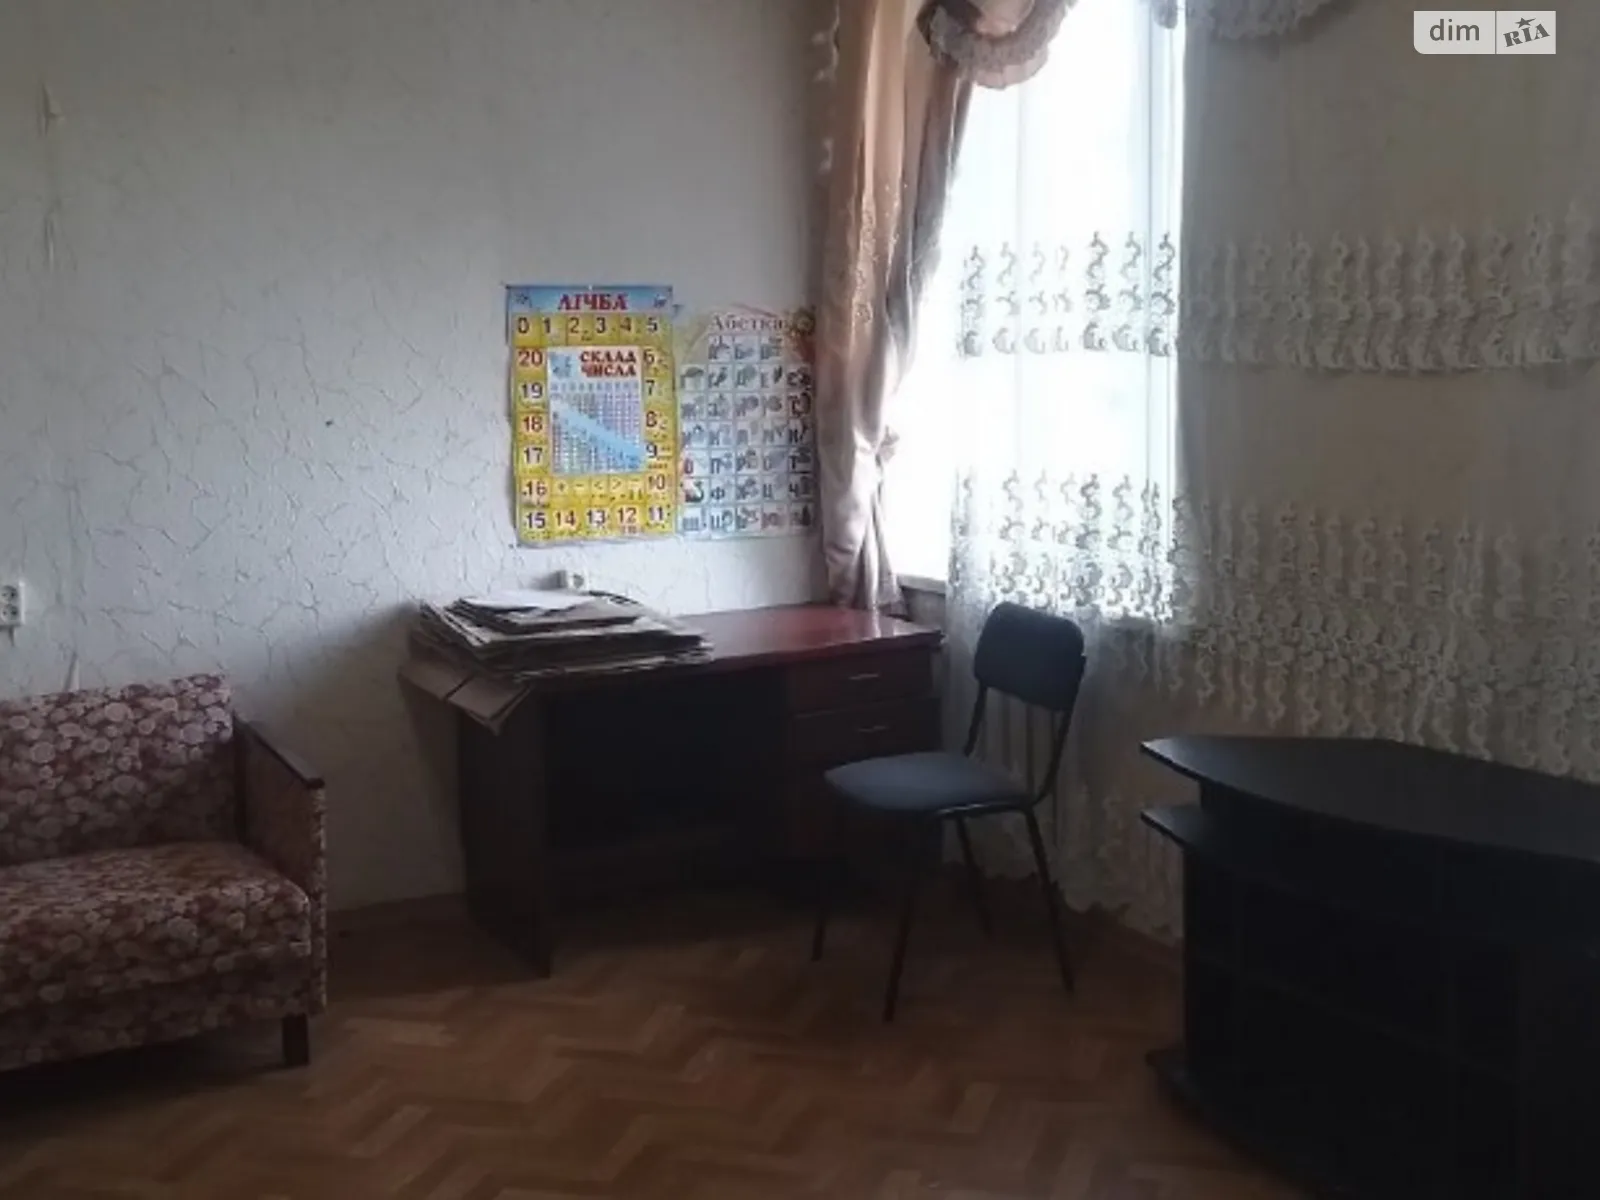 Сдается в аренду комната 28 кв. м в Харькове - фото 3